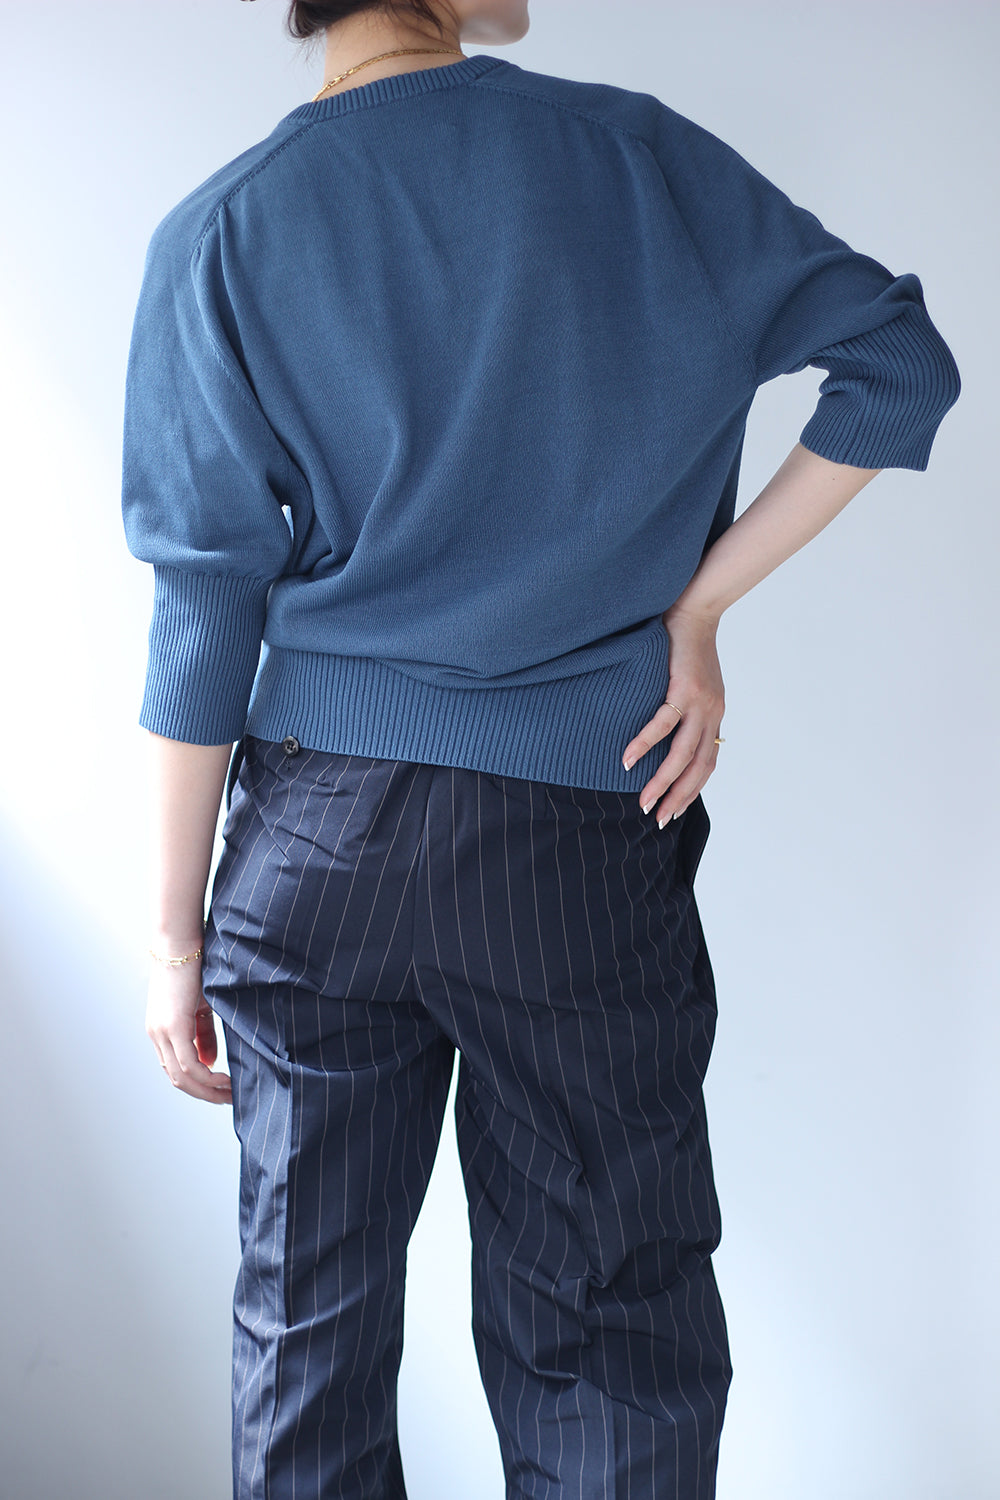 JUN MIKAMI "slacks" (stripe)